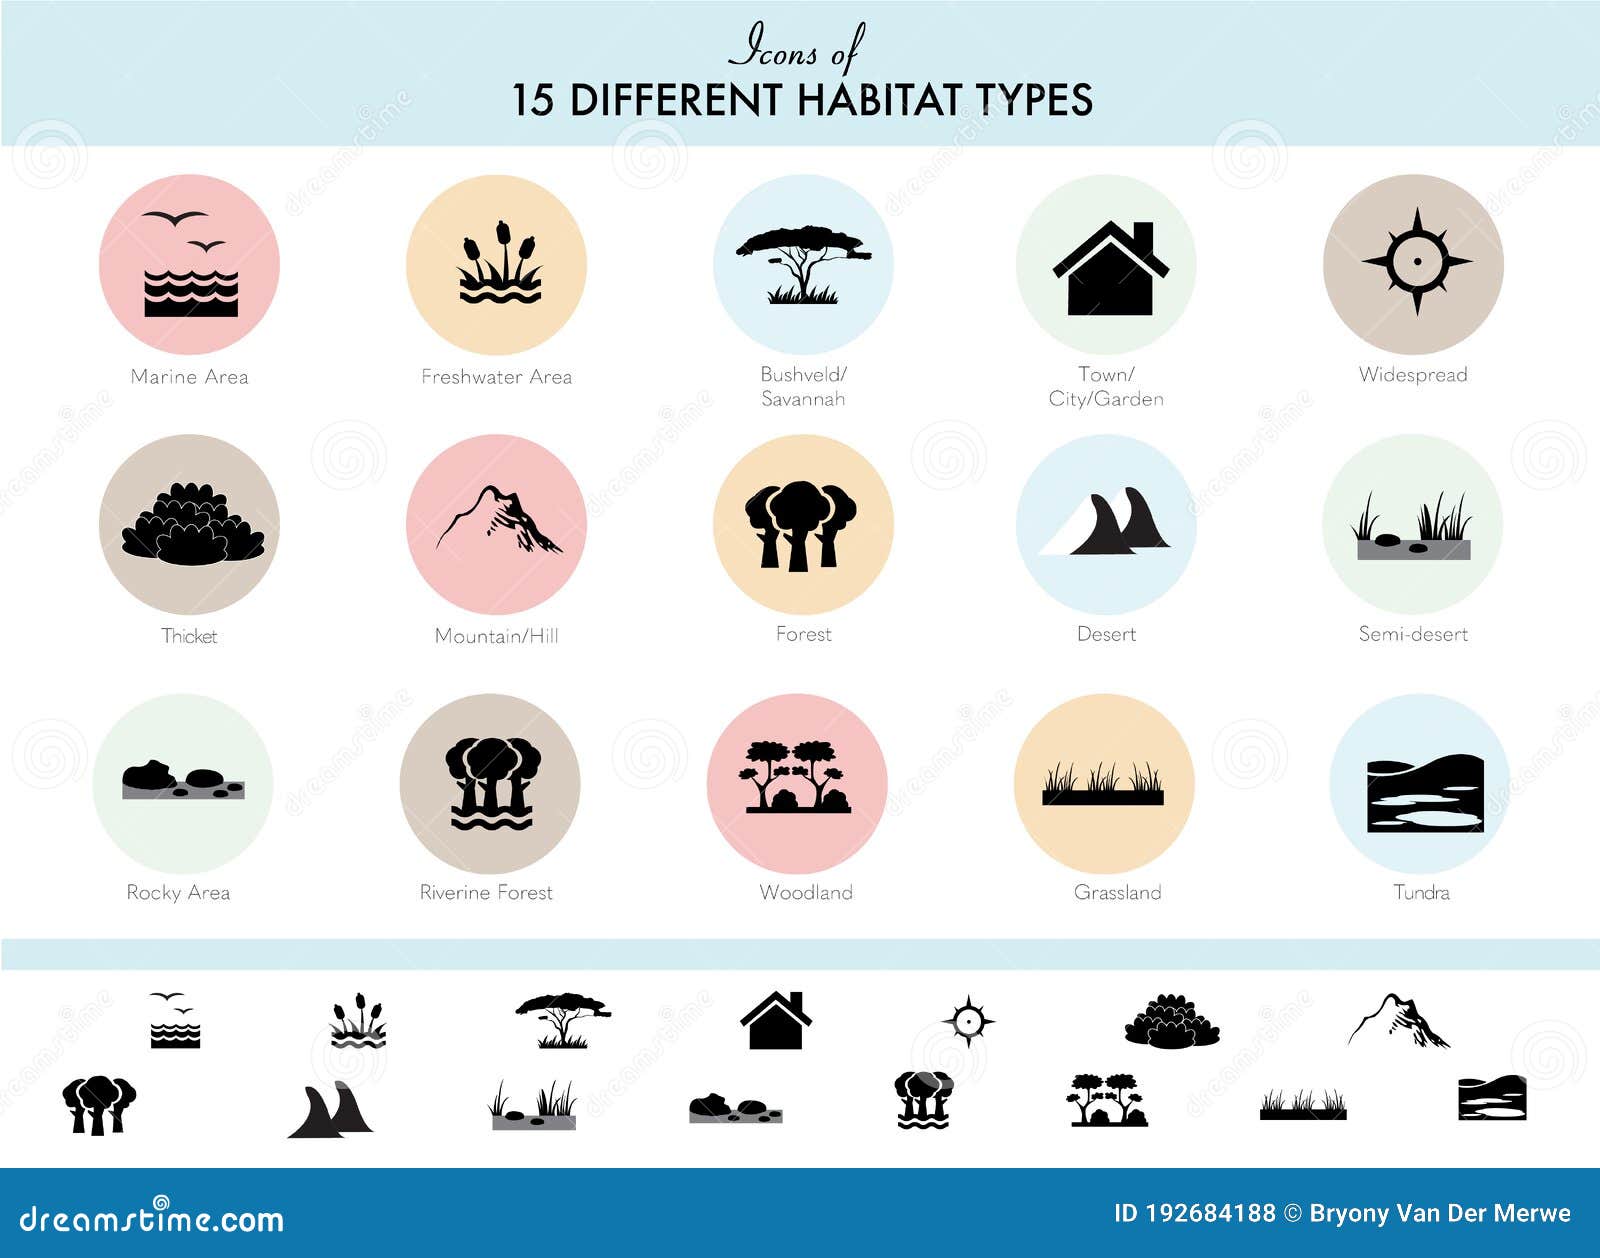 animal habitat types